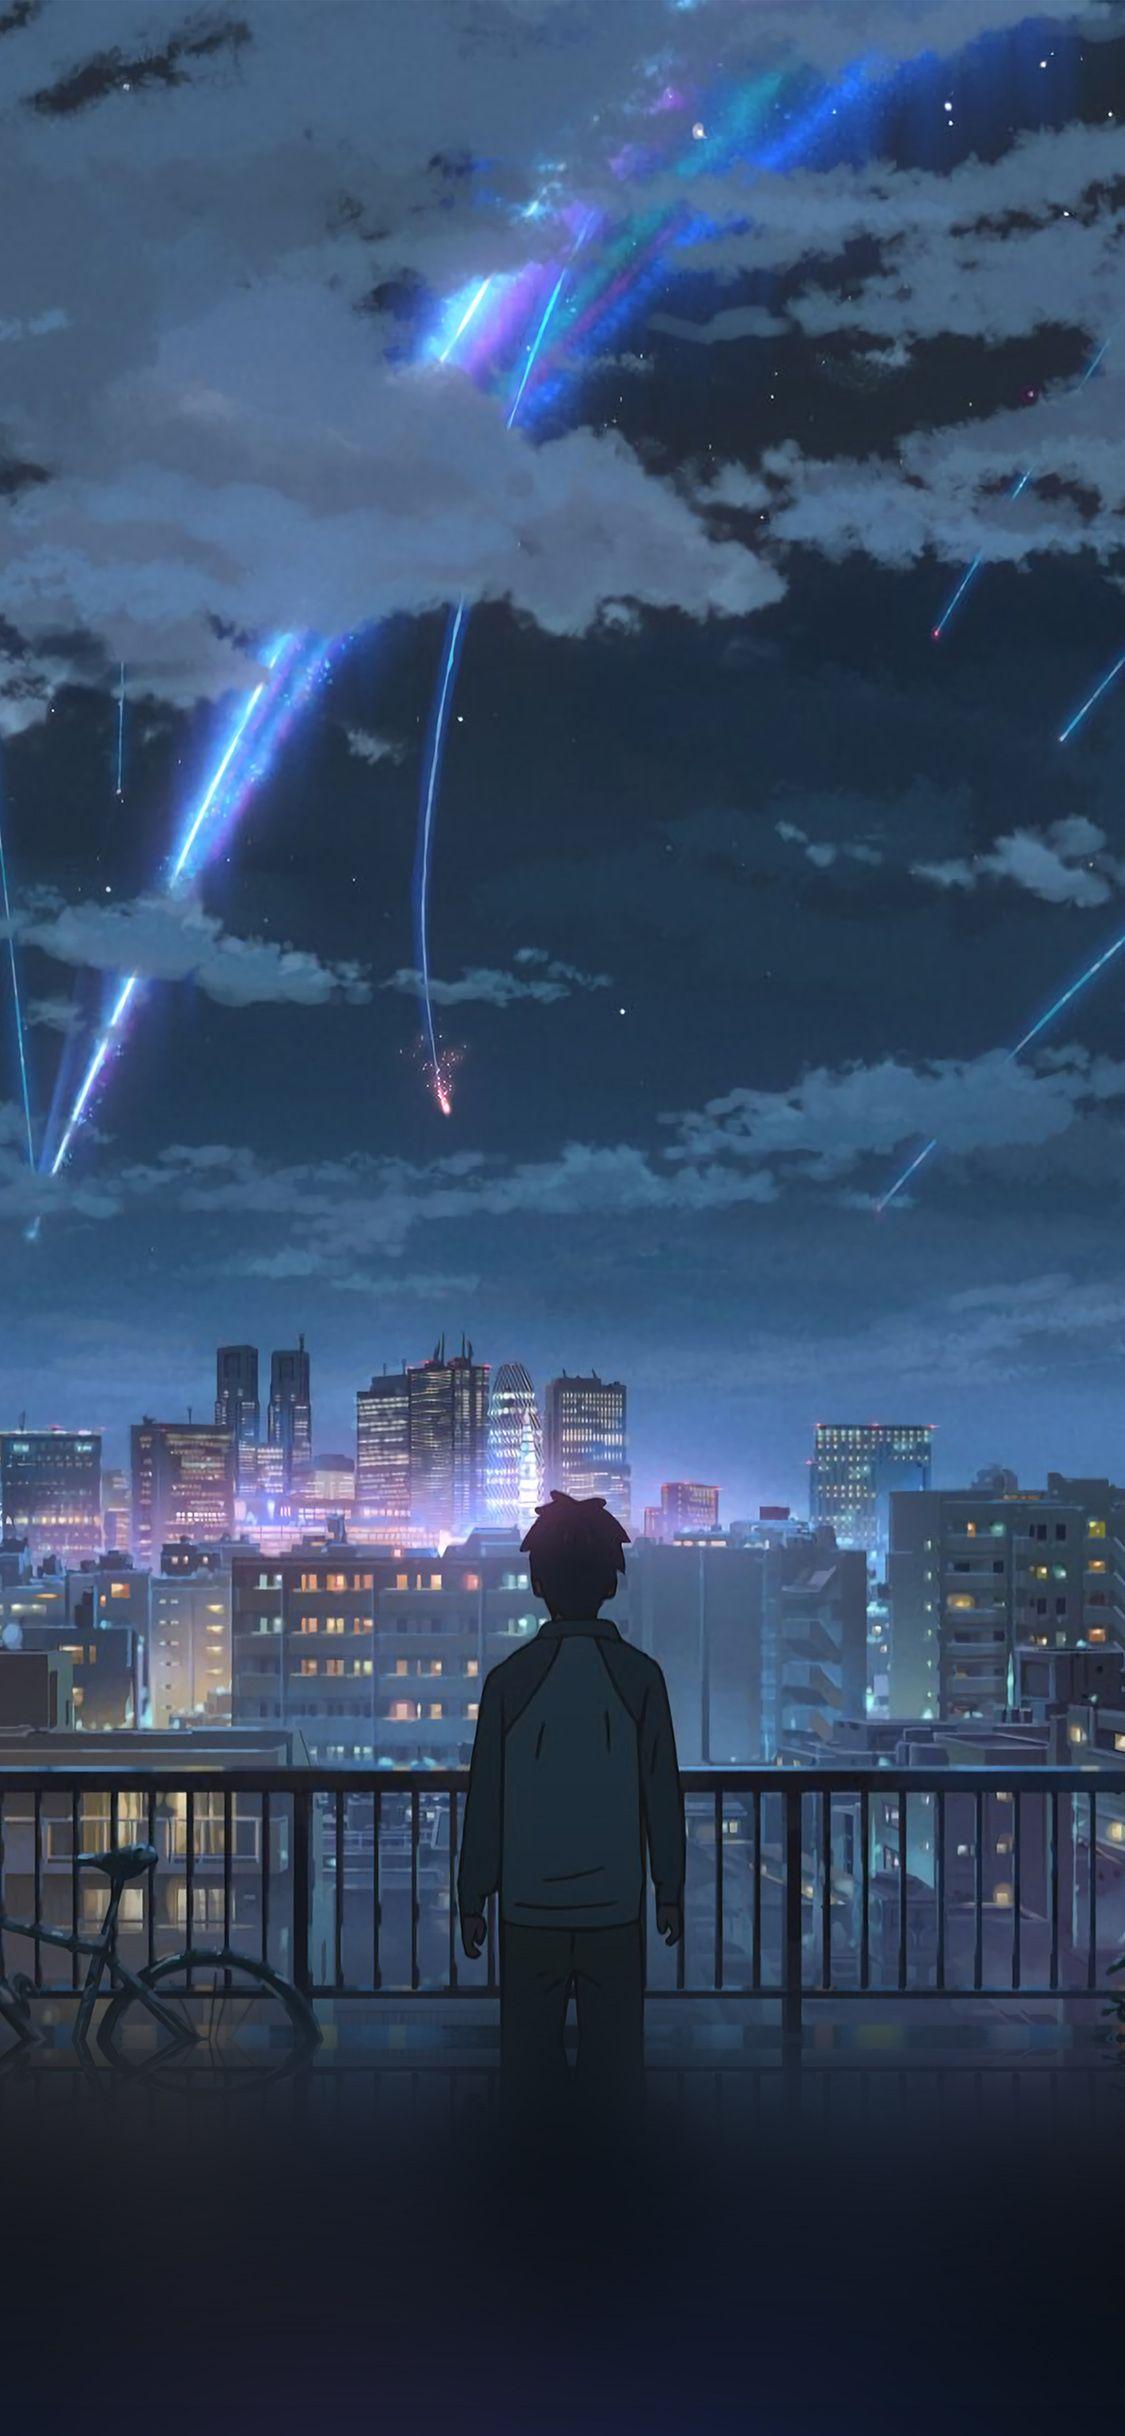 iPhone X wallpaper. yourname night anime sky illustration art